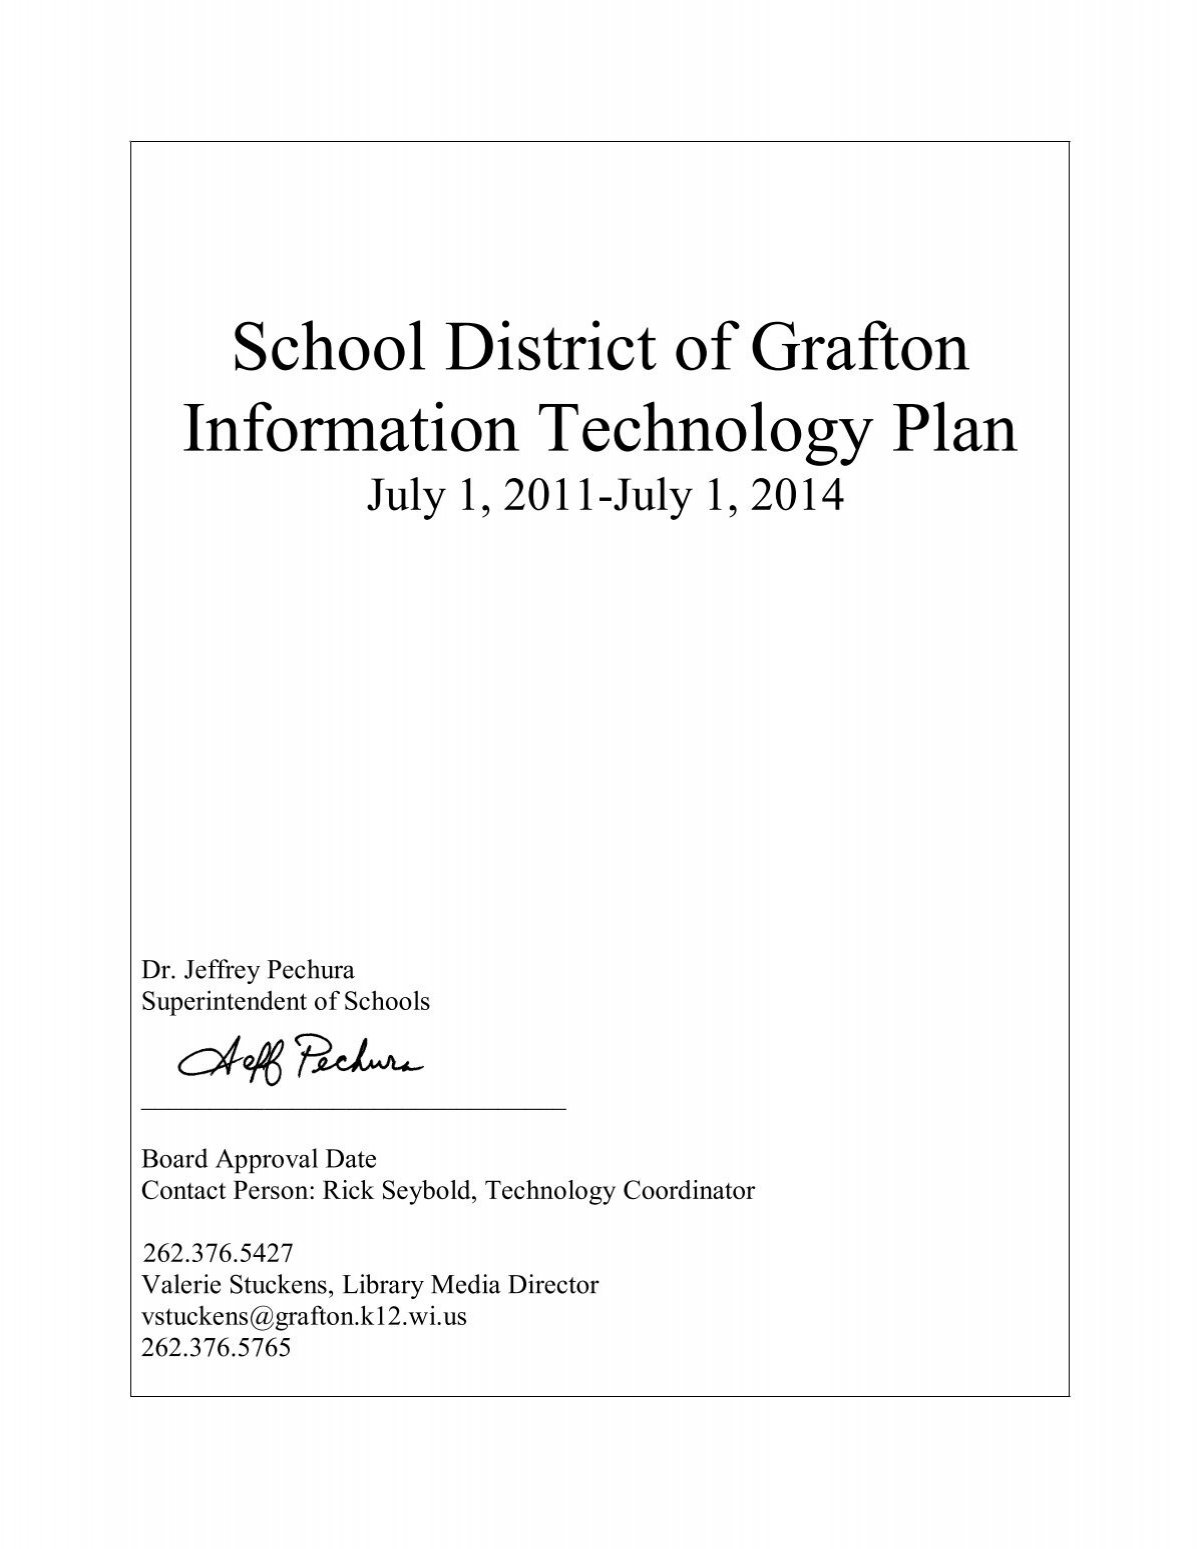 School District of Grafton Information Technology Plan